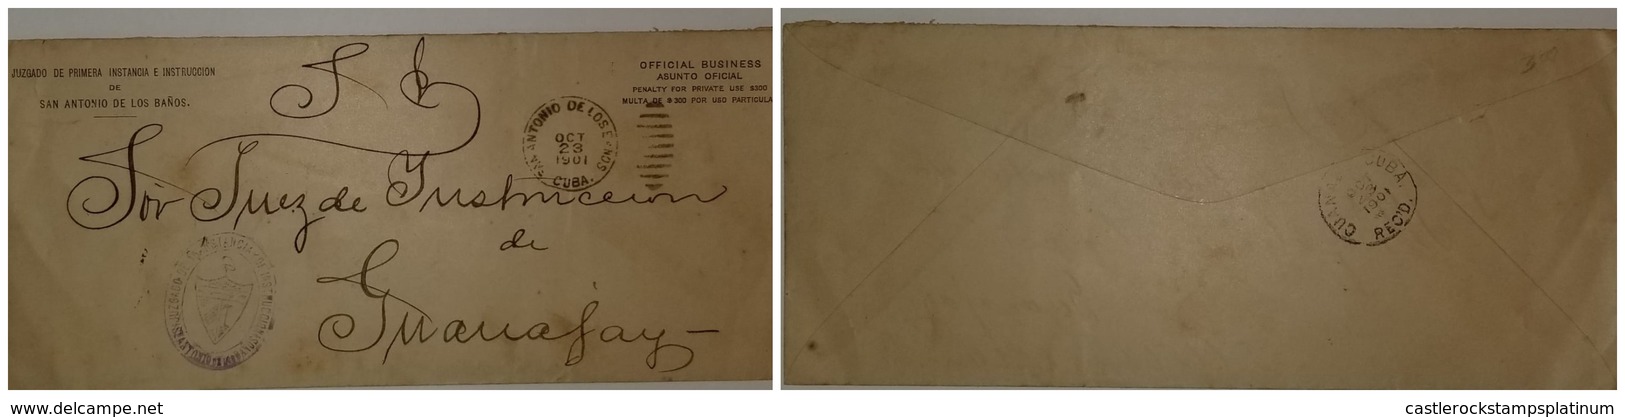 O) 1901 CUBA - SPANISH ANTILLES, SAN ANTONI ODE LOS BAÑOS, OFFICIAL BUSINESS - ASUNTO OFICIAL, JUZGADO DE PRIMERA INSTAN - Covers & Documents